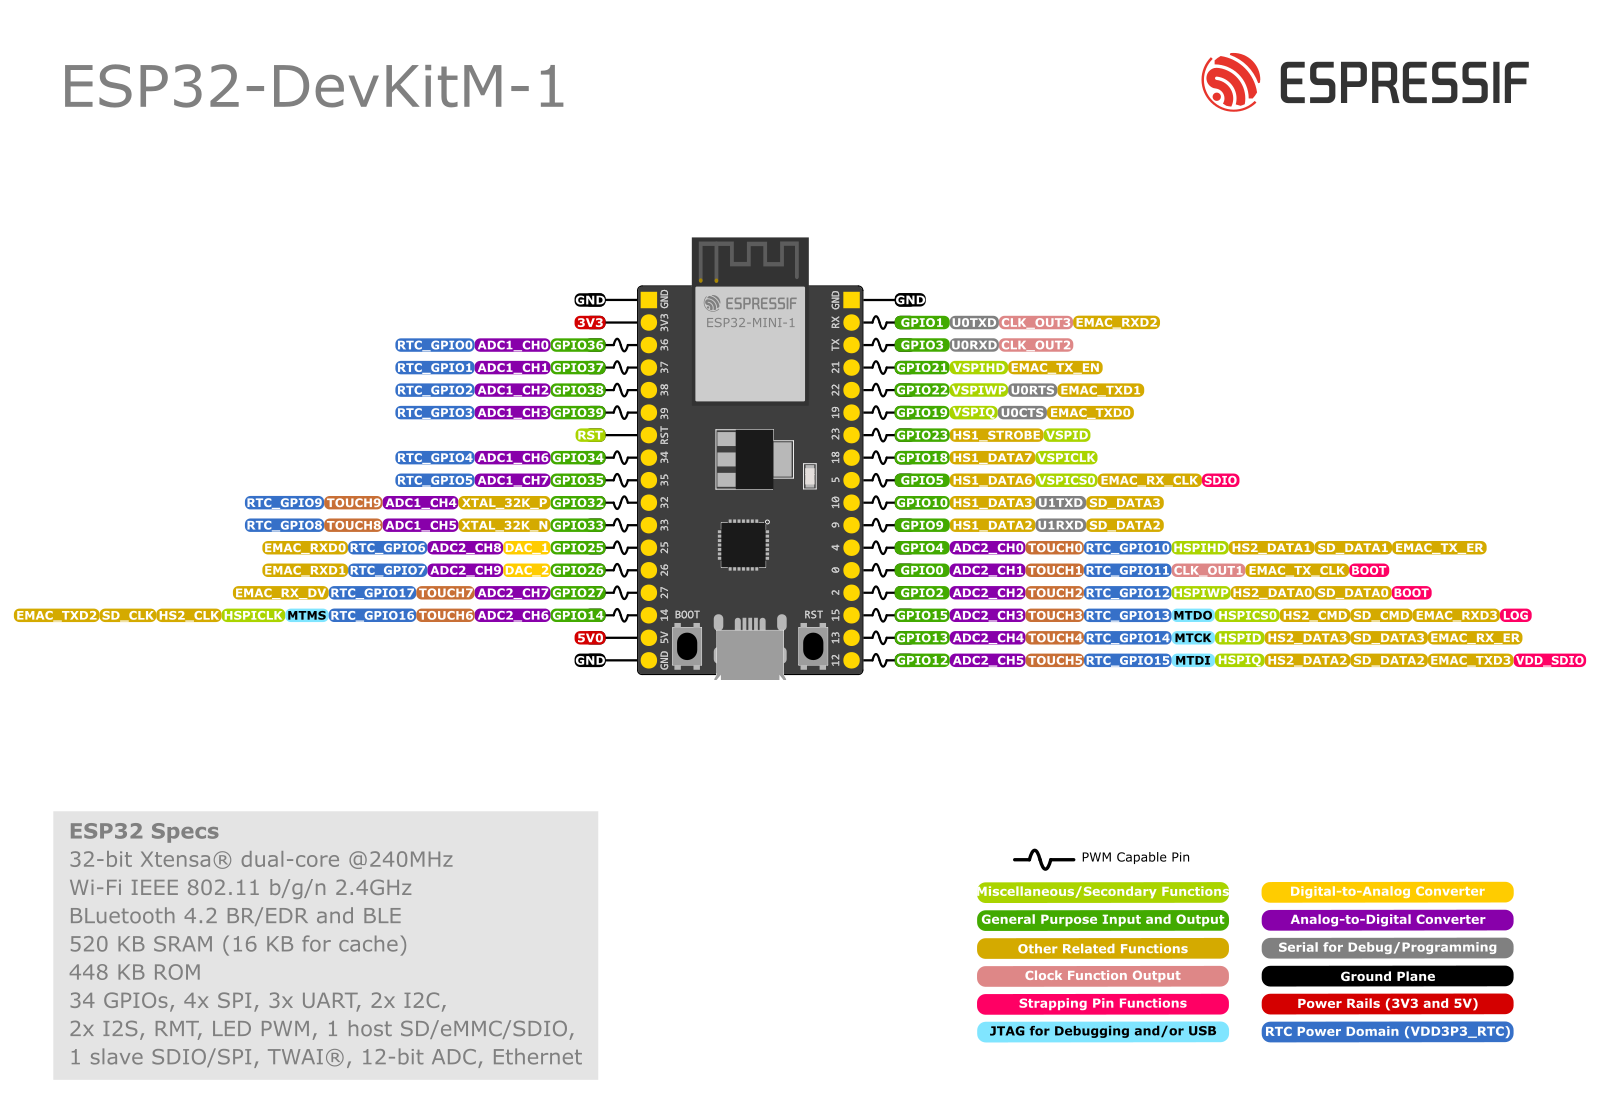 ESP32-DevKitM-1 (click to enlarge)